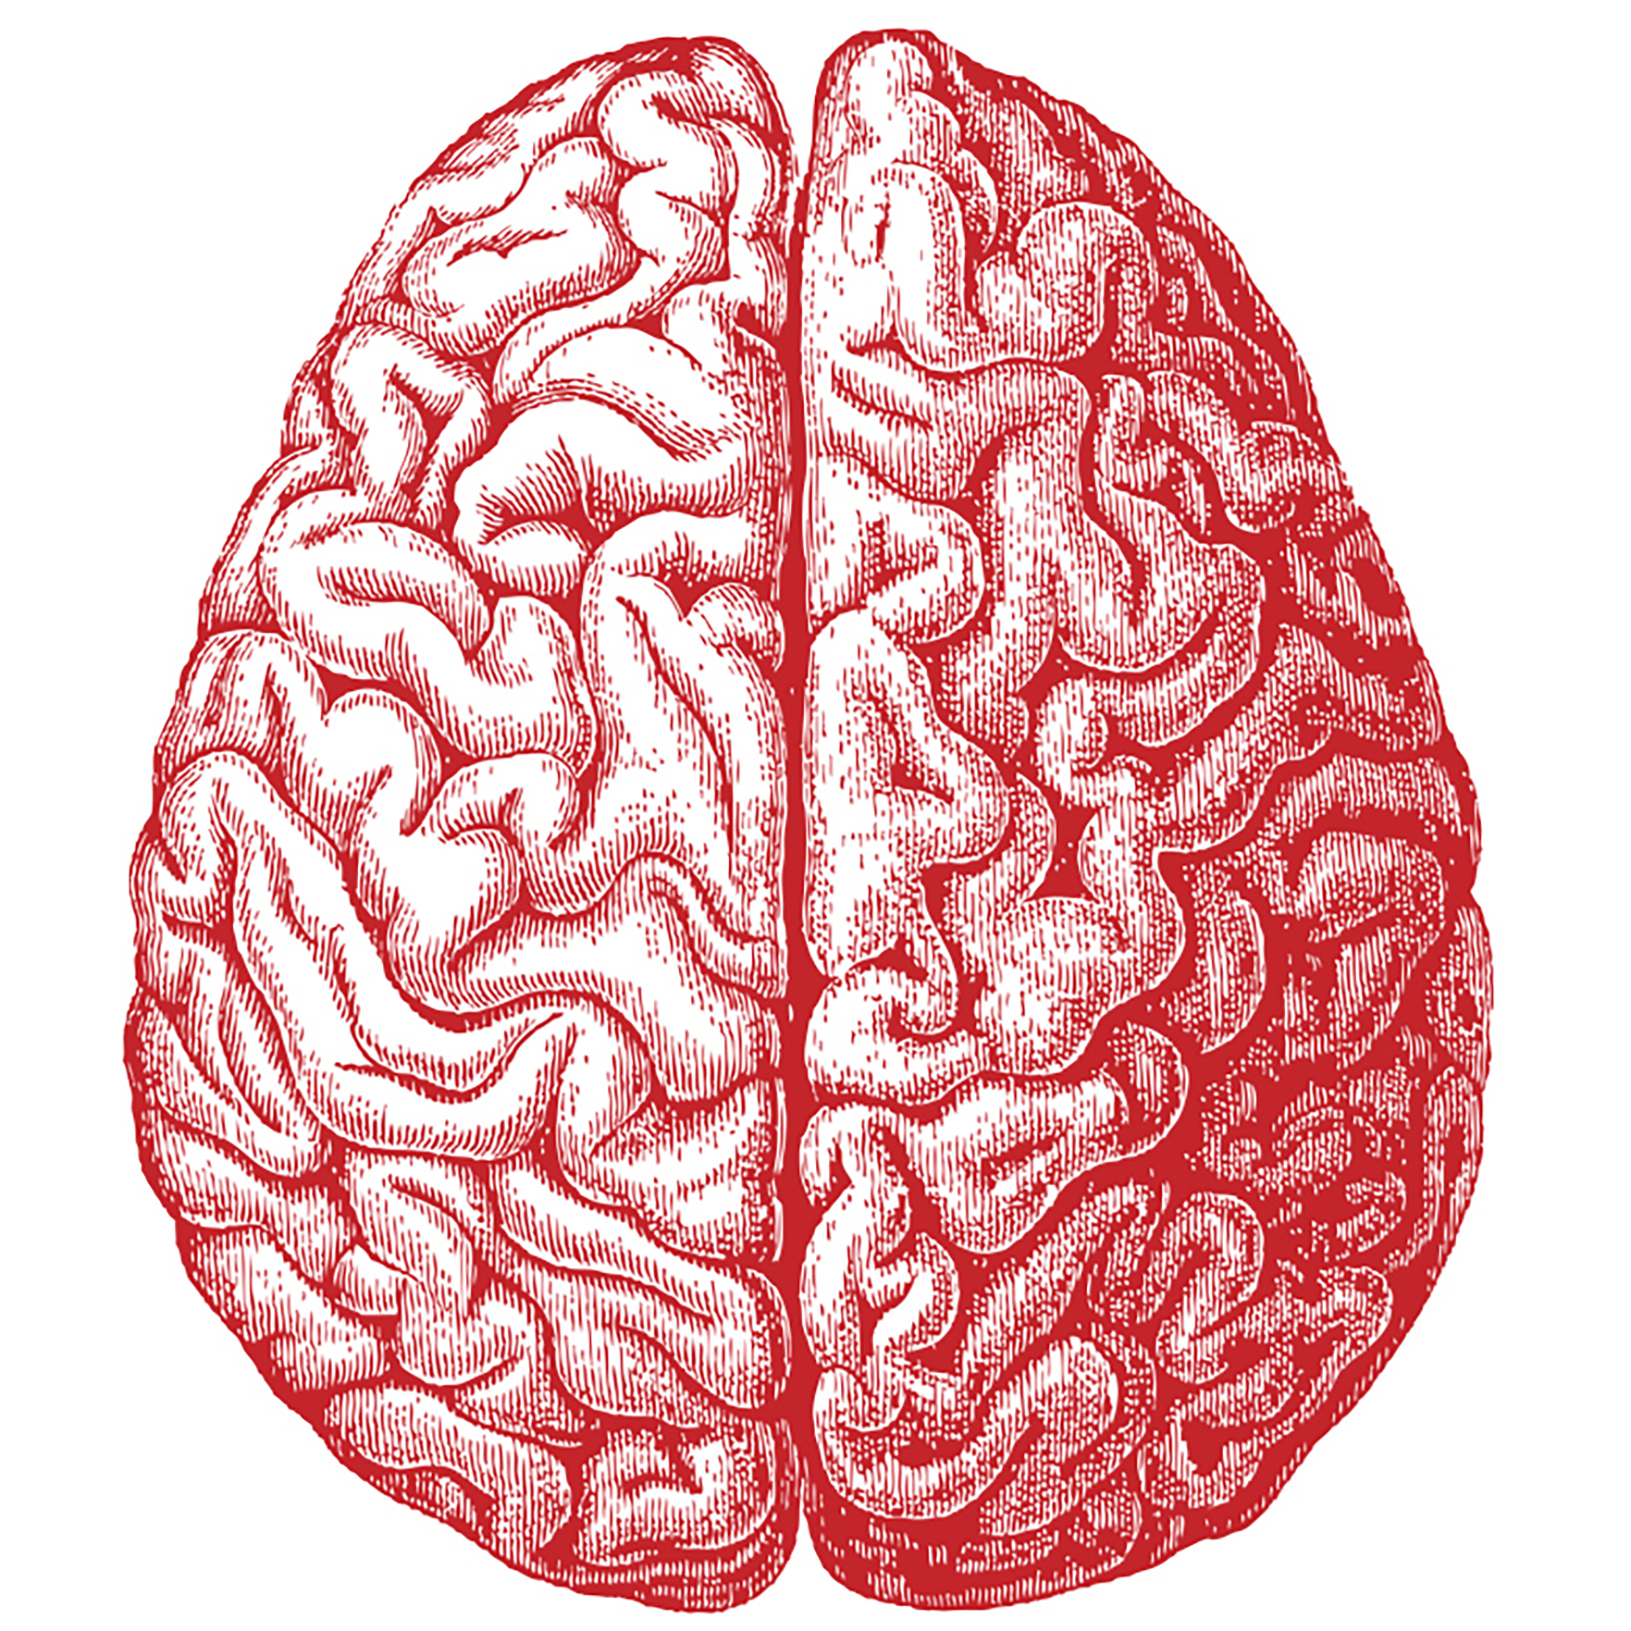 Мозг без полушарий. Мозг вид сверху. Полушария мозга.